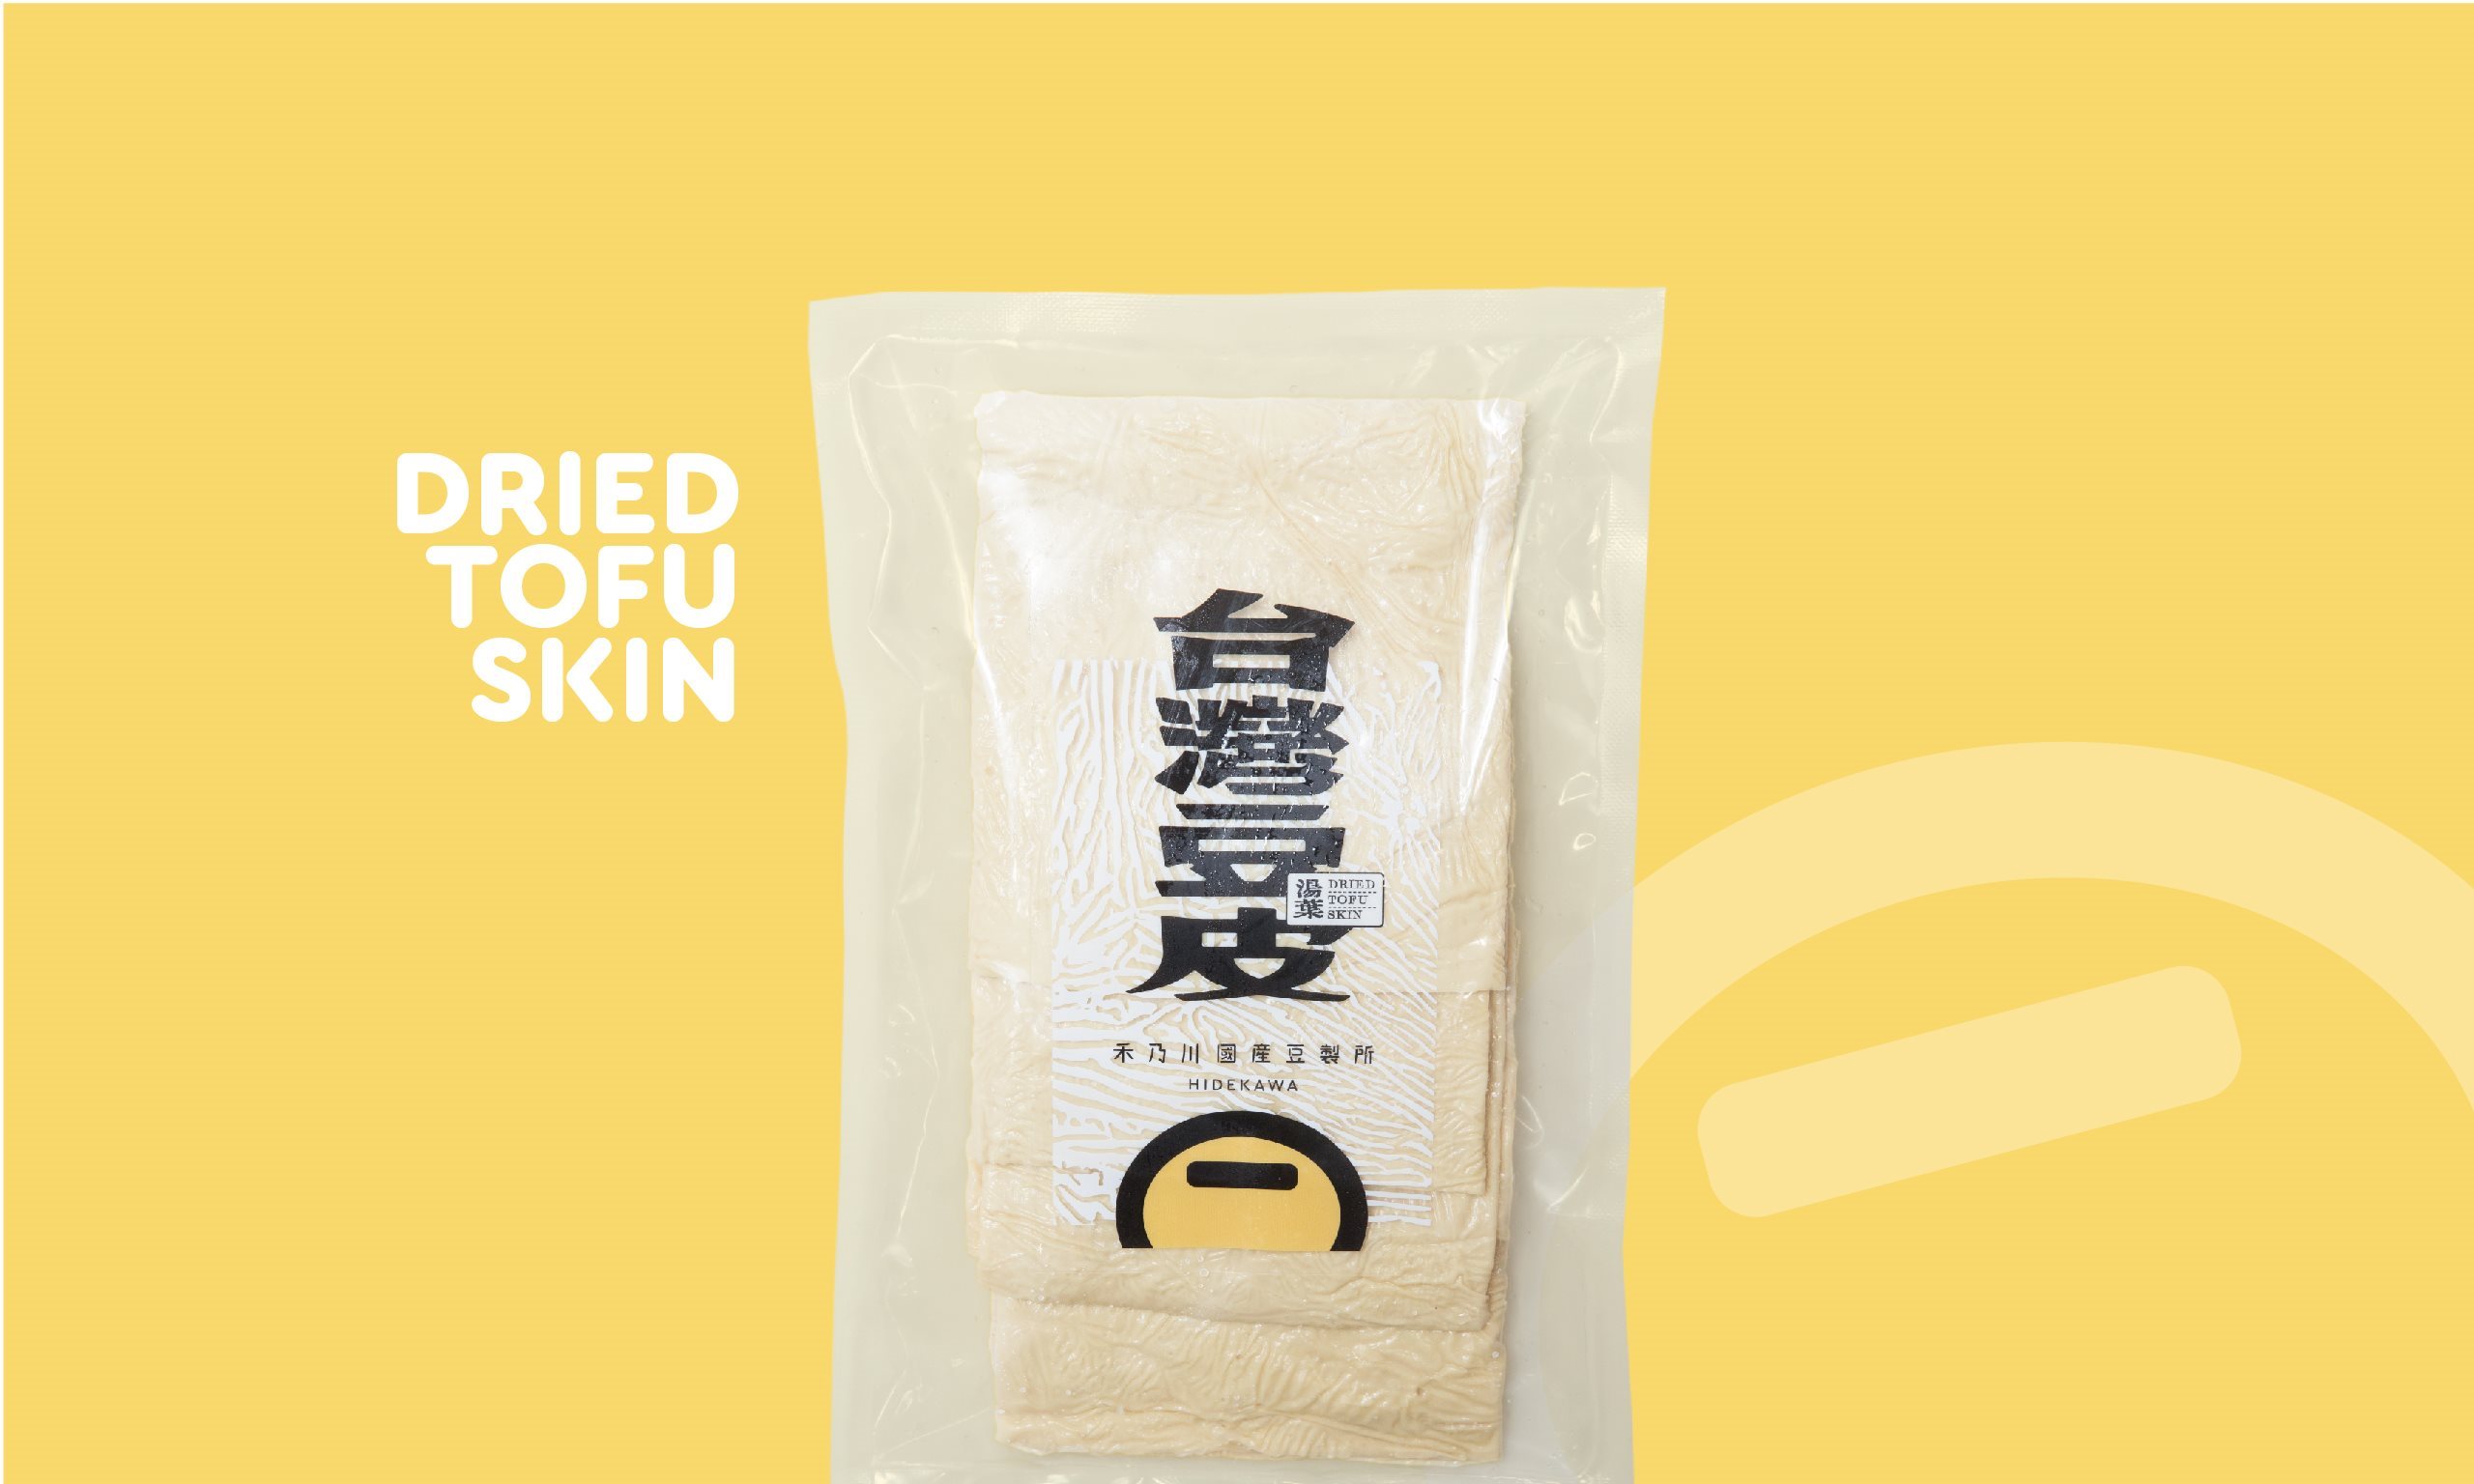 Taiwan Handmade Dried Tofu Skin - steamed by domestic non-GMO soy milk